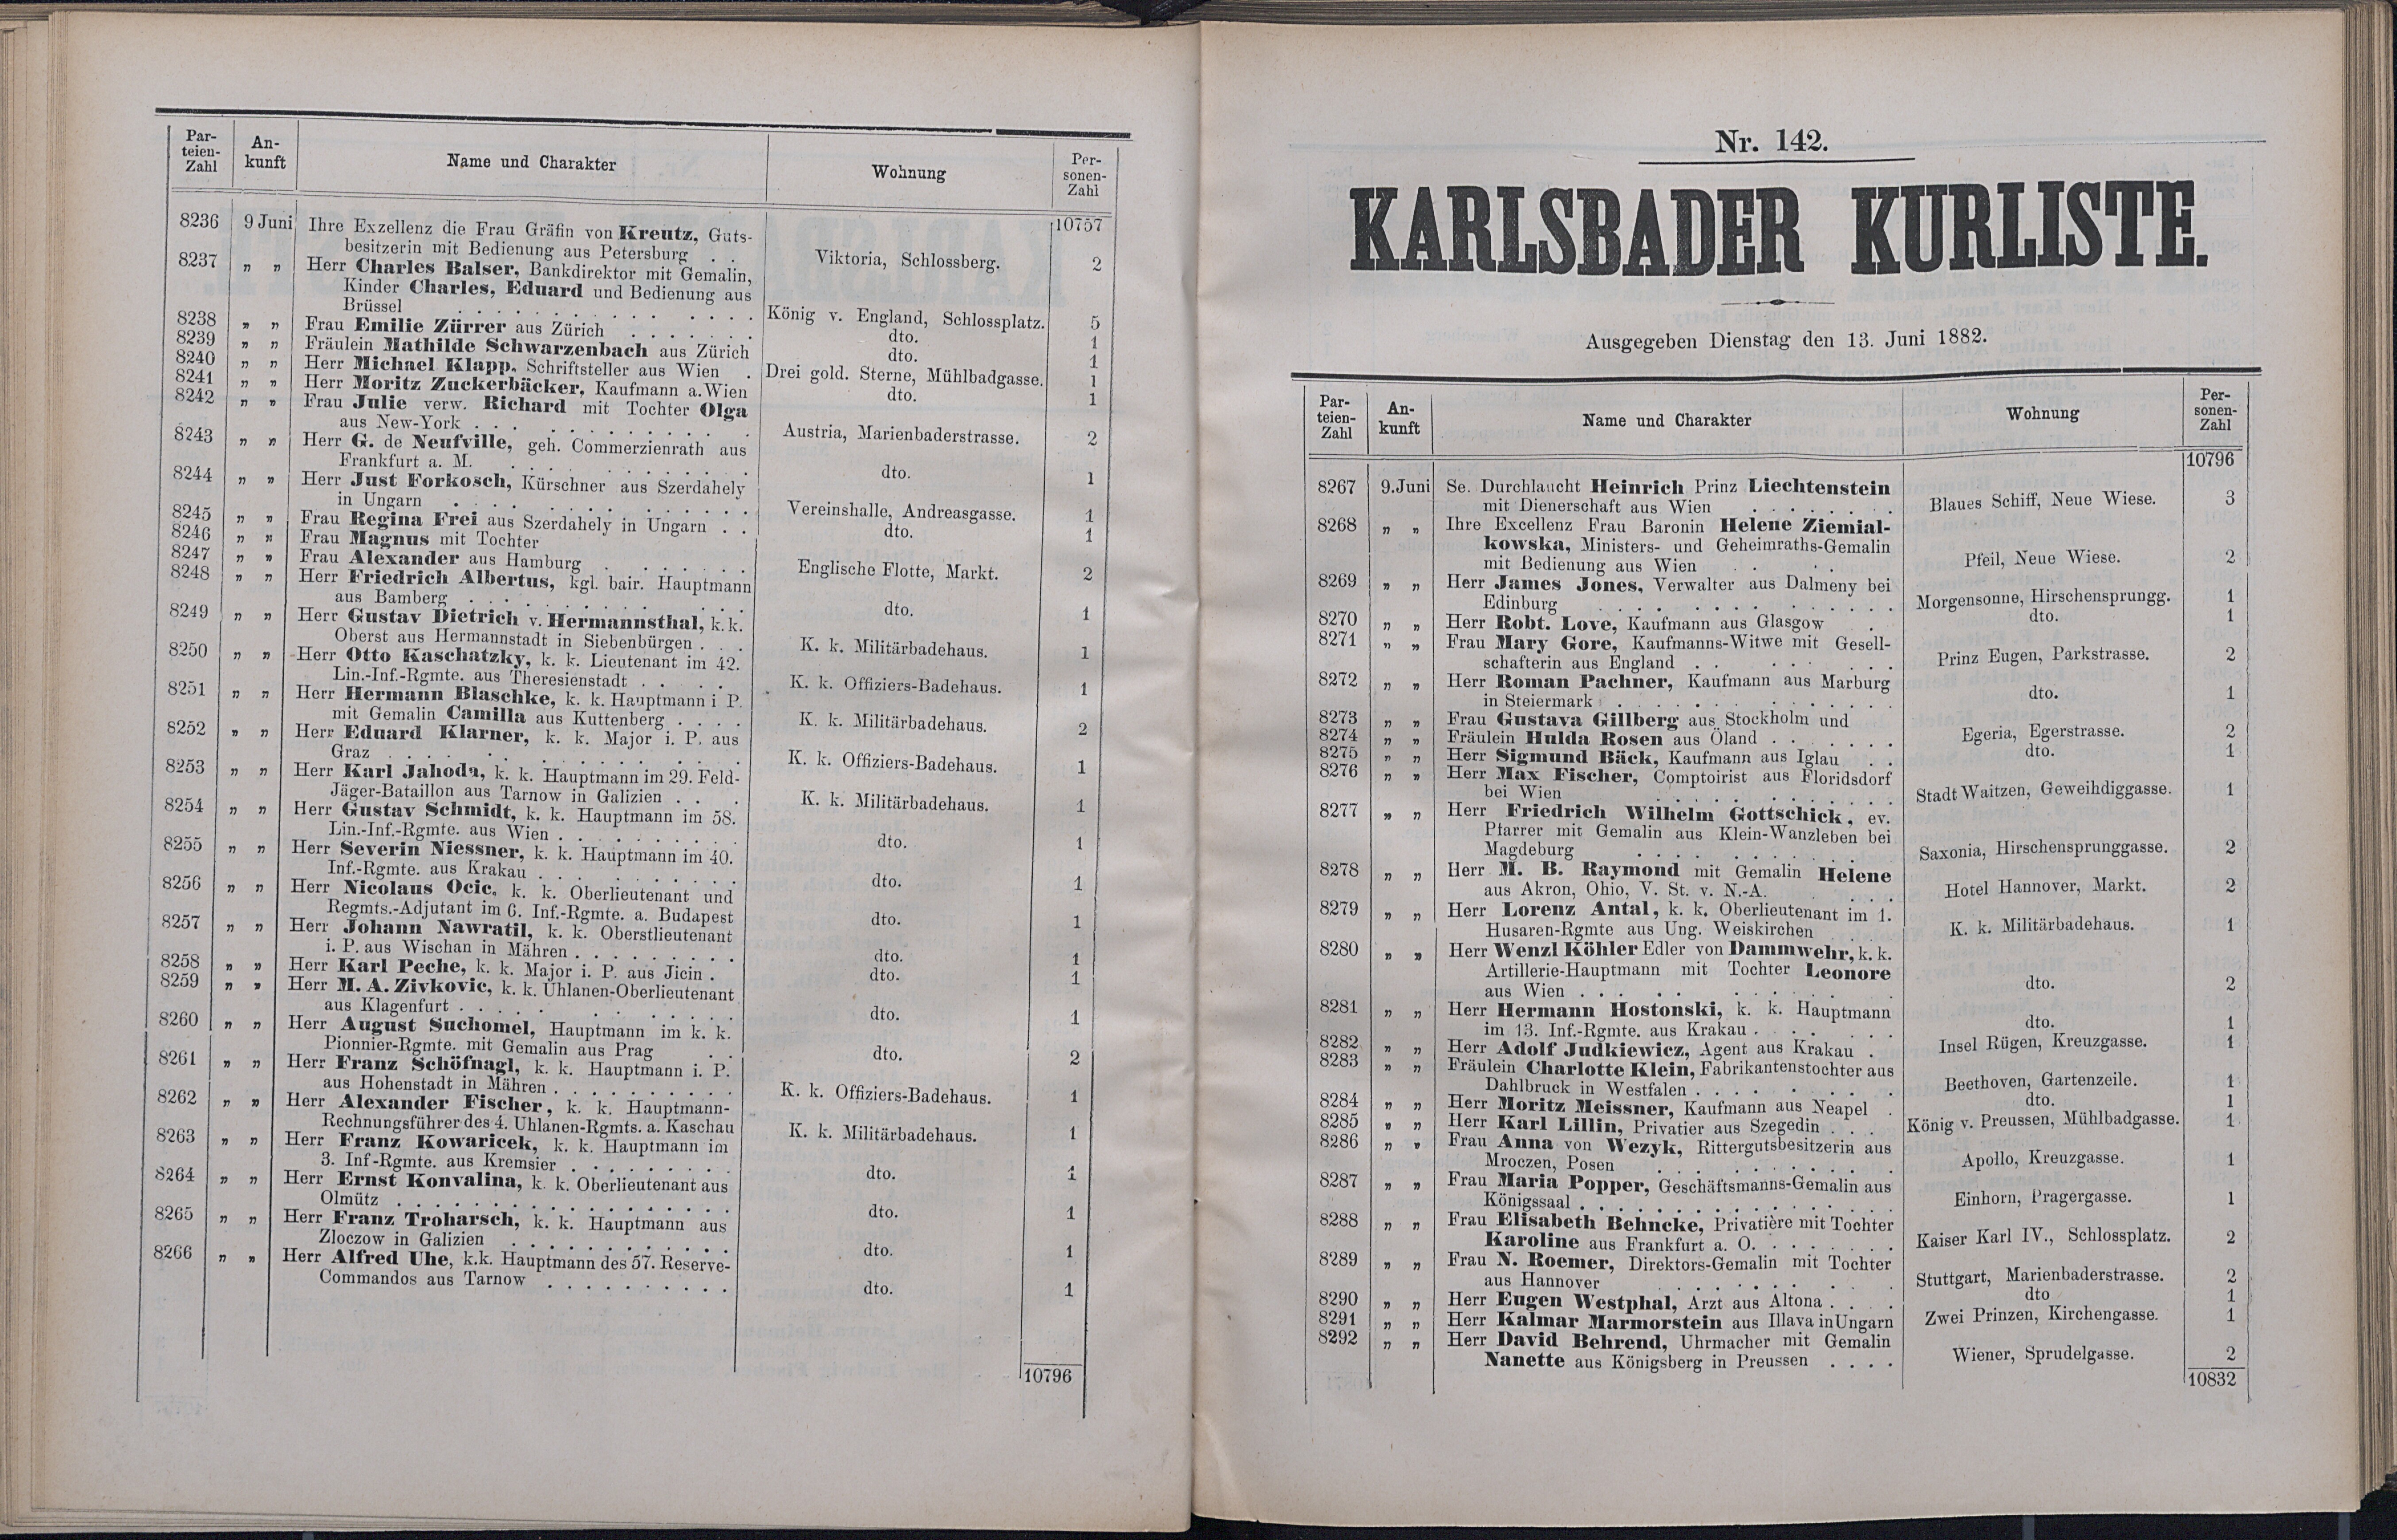 189. soap-kv_knihovna_karlsbader-kurliste-1882_1900